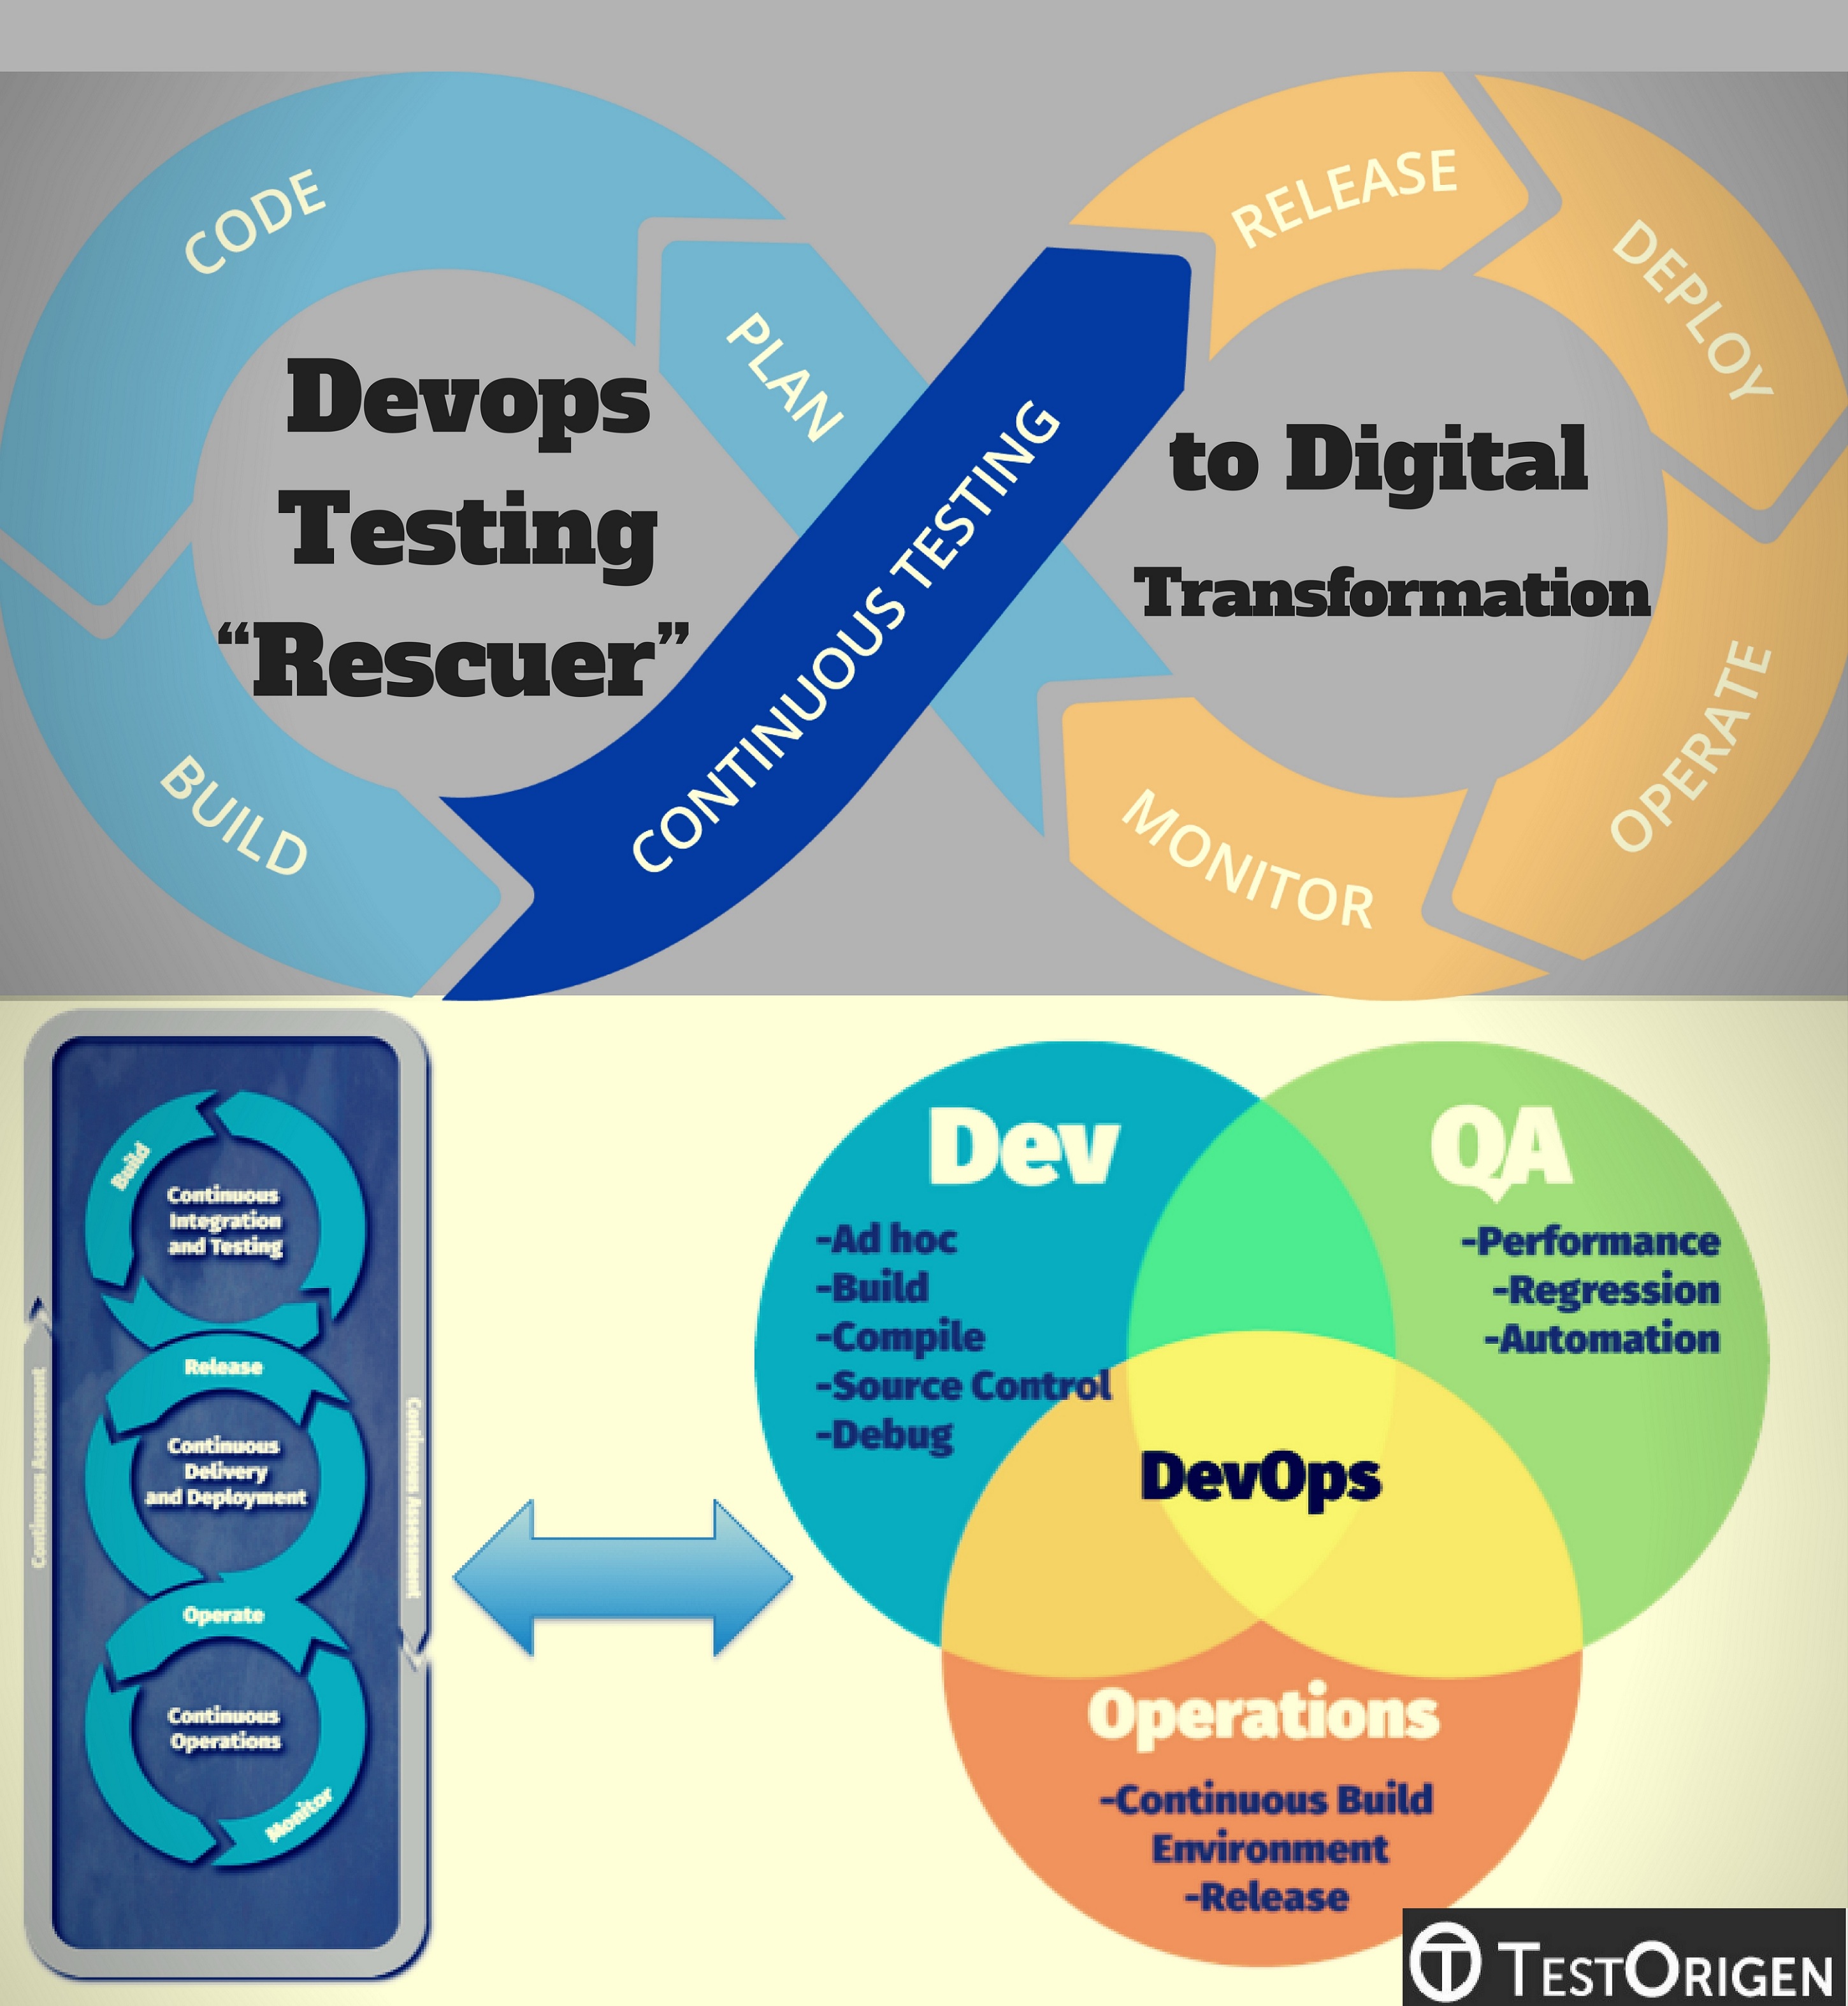 Devops Testing “Rescuer” to Digital Transformation